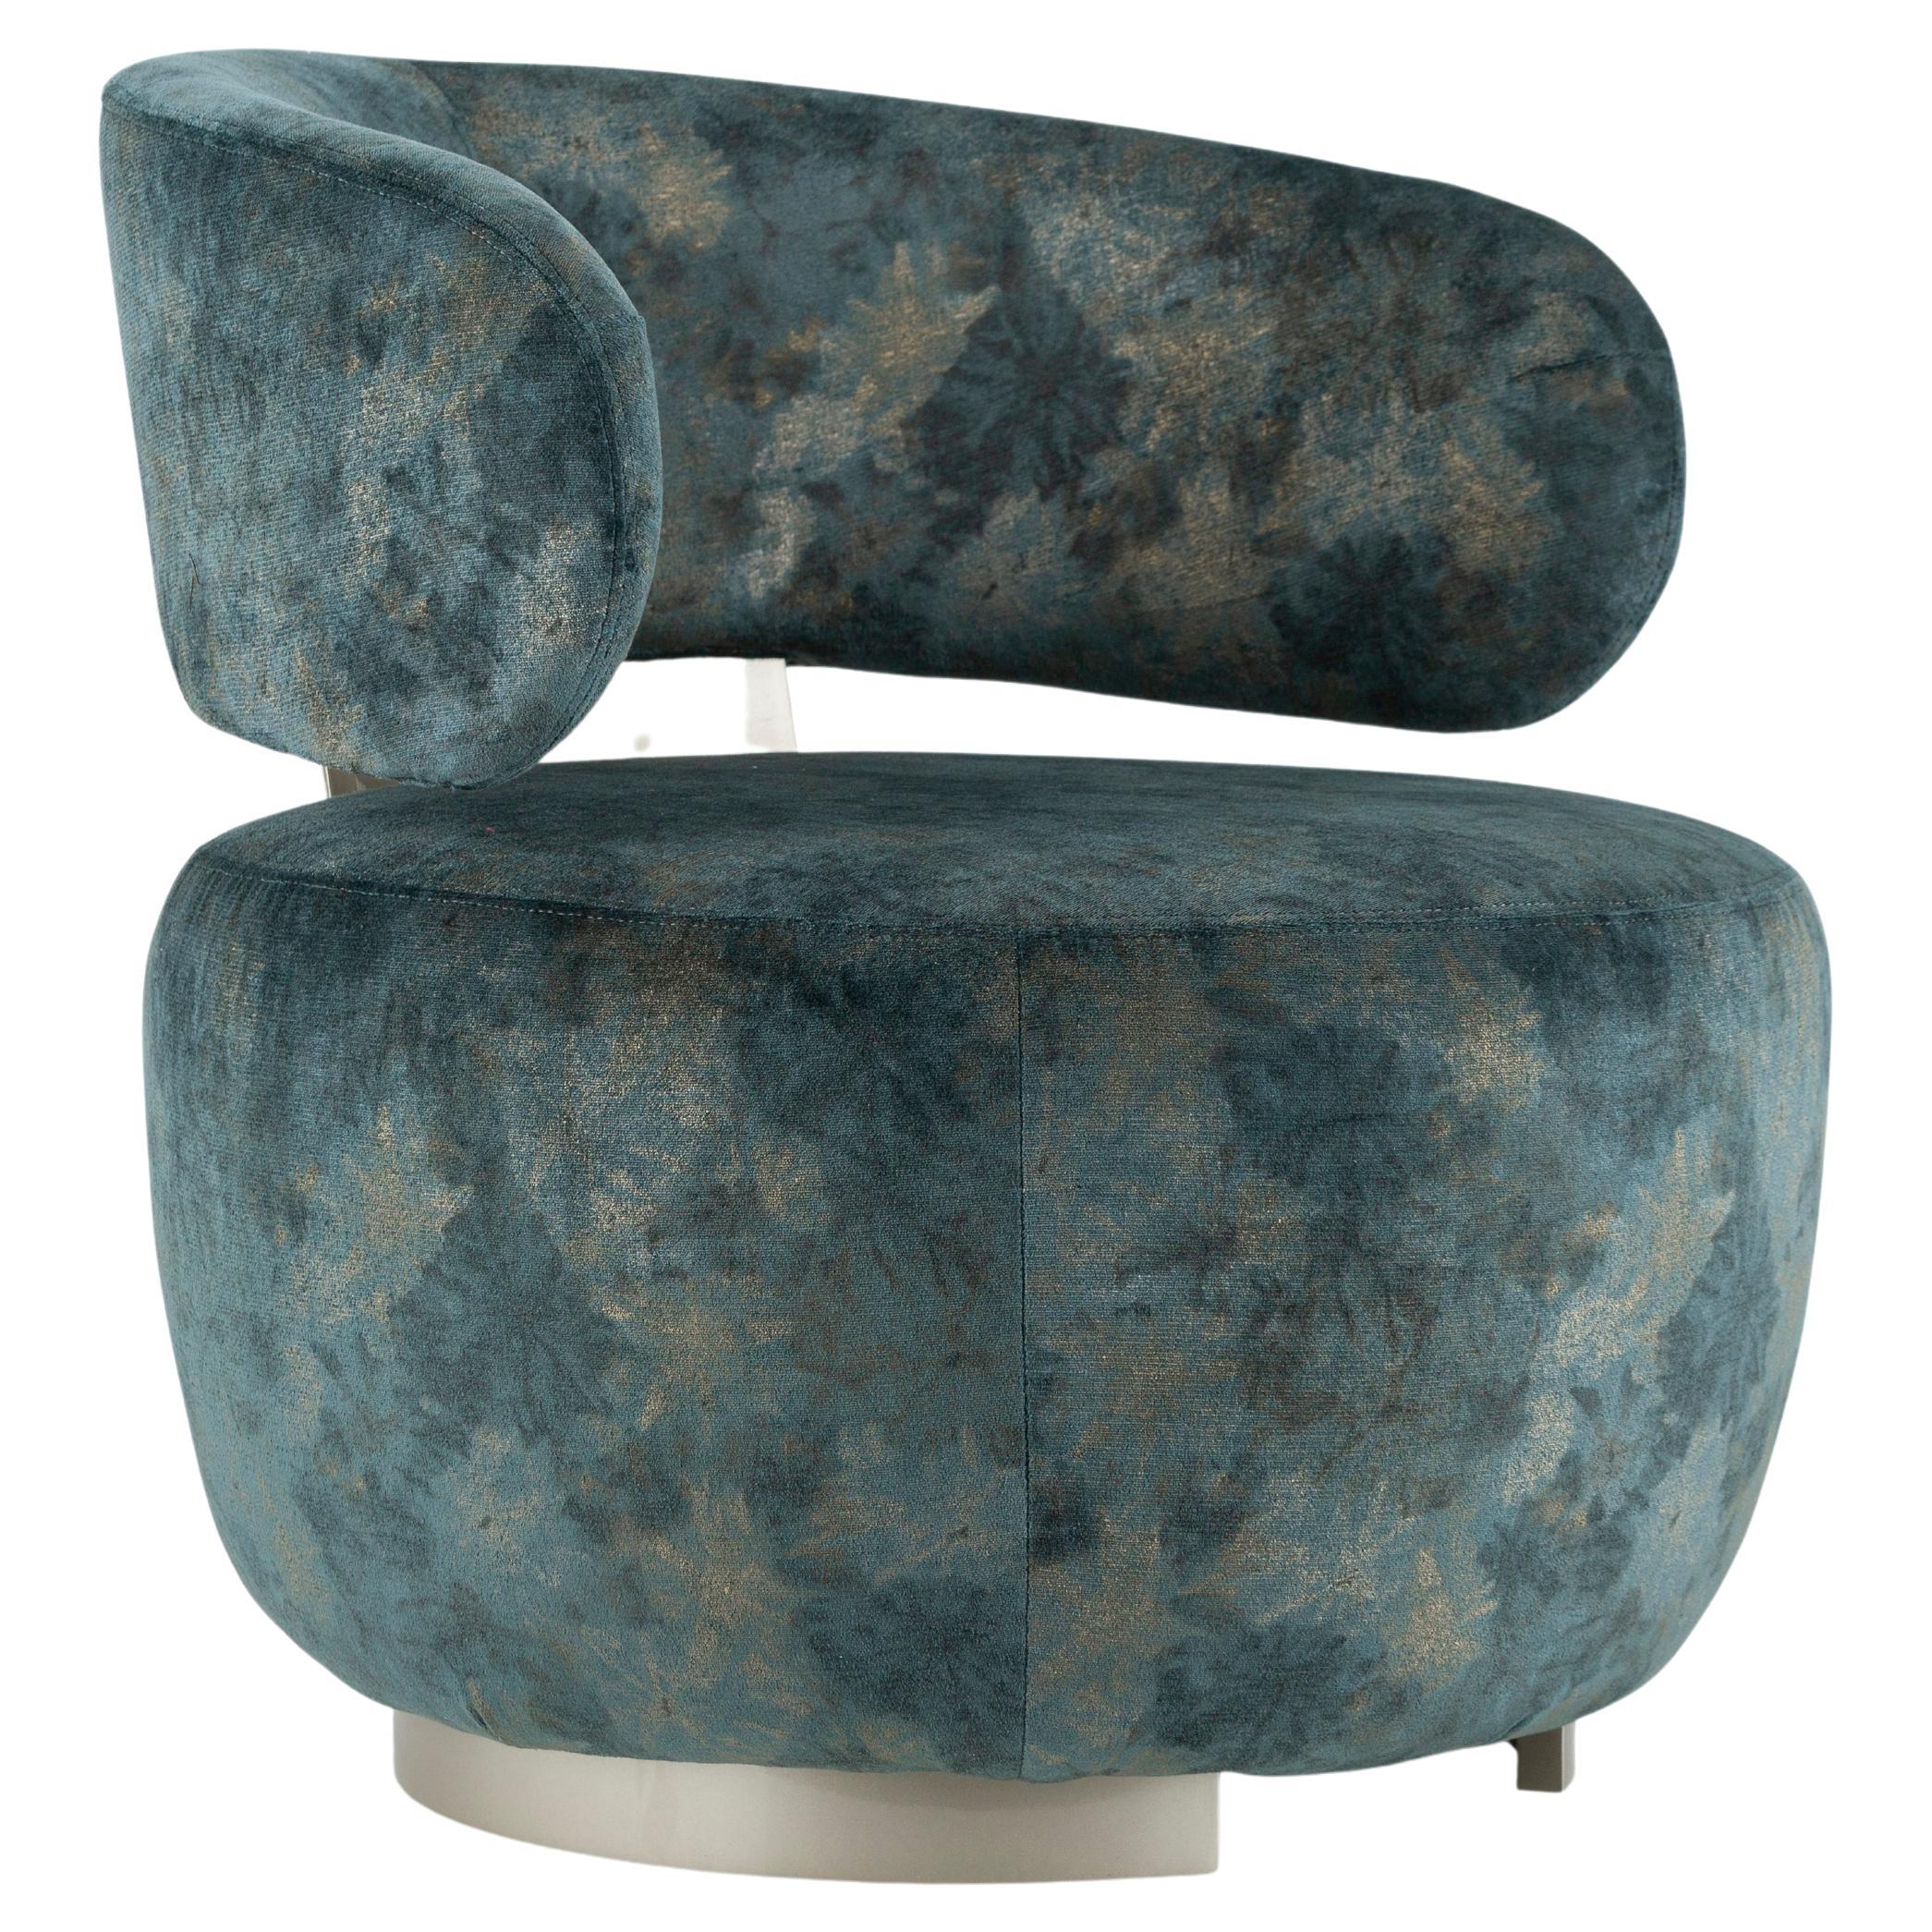 Modern Caju Lounge Chair Jacquard Velvet Handmade in Portugal by Greenapple